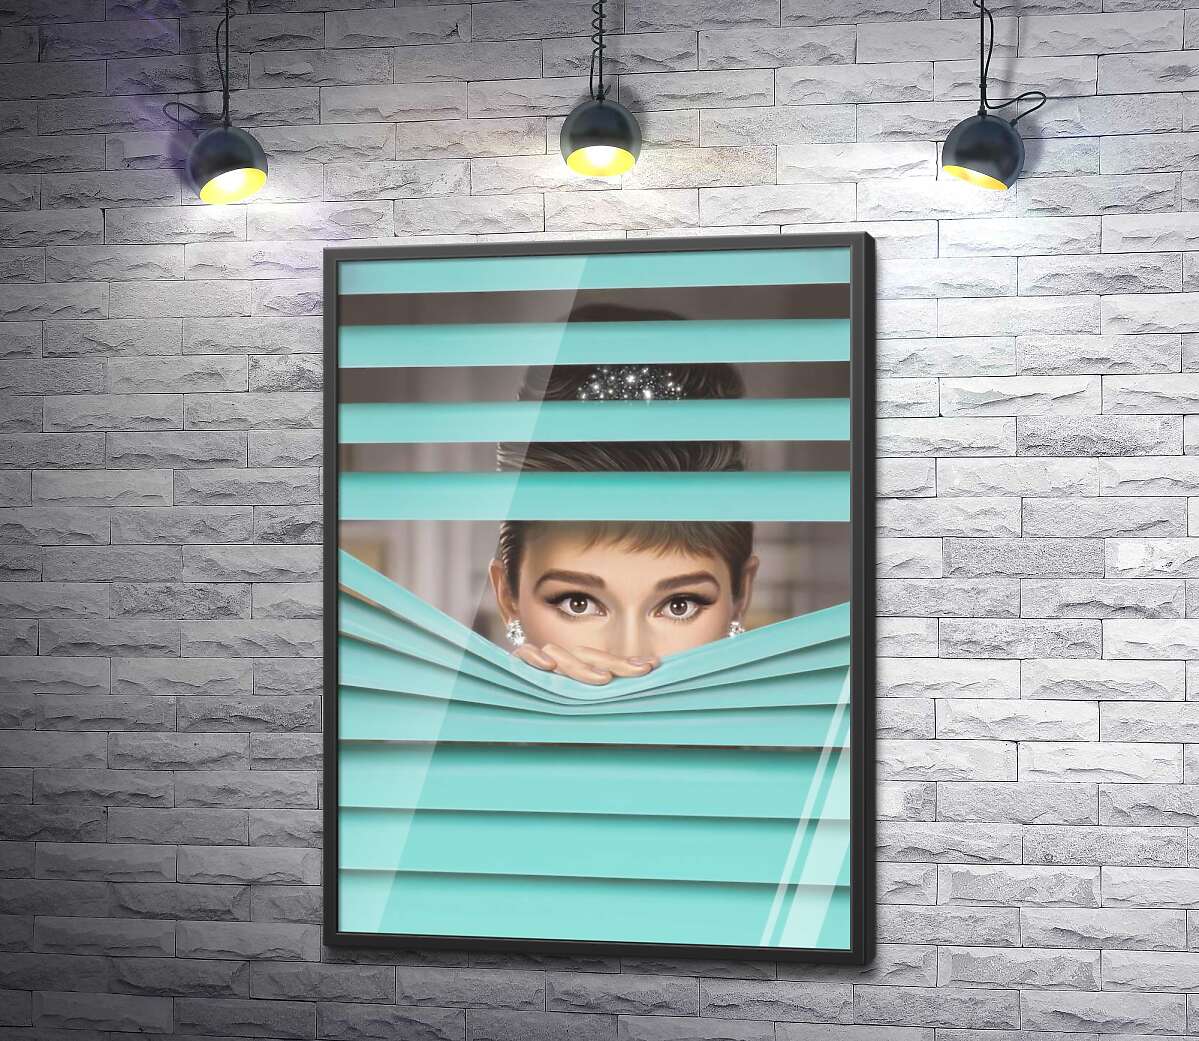 постер Одри Хепбёрн (Audrey Hepburn) в роли героини фильма "Завтрак у Тиффани" (Breakfast at Tiffany's)